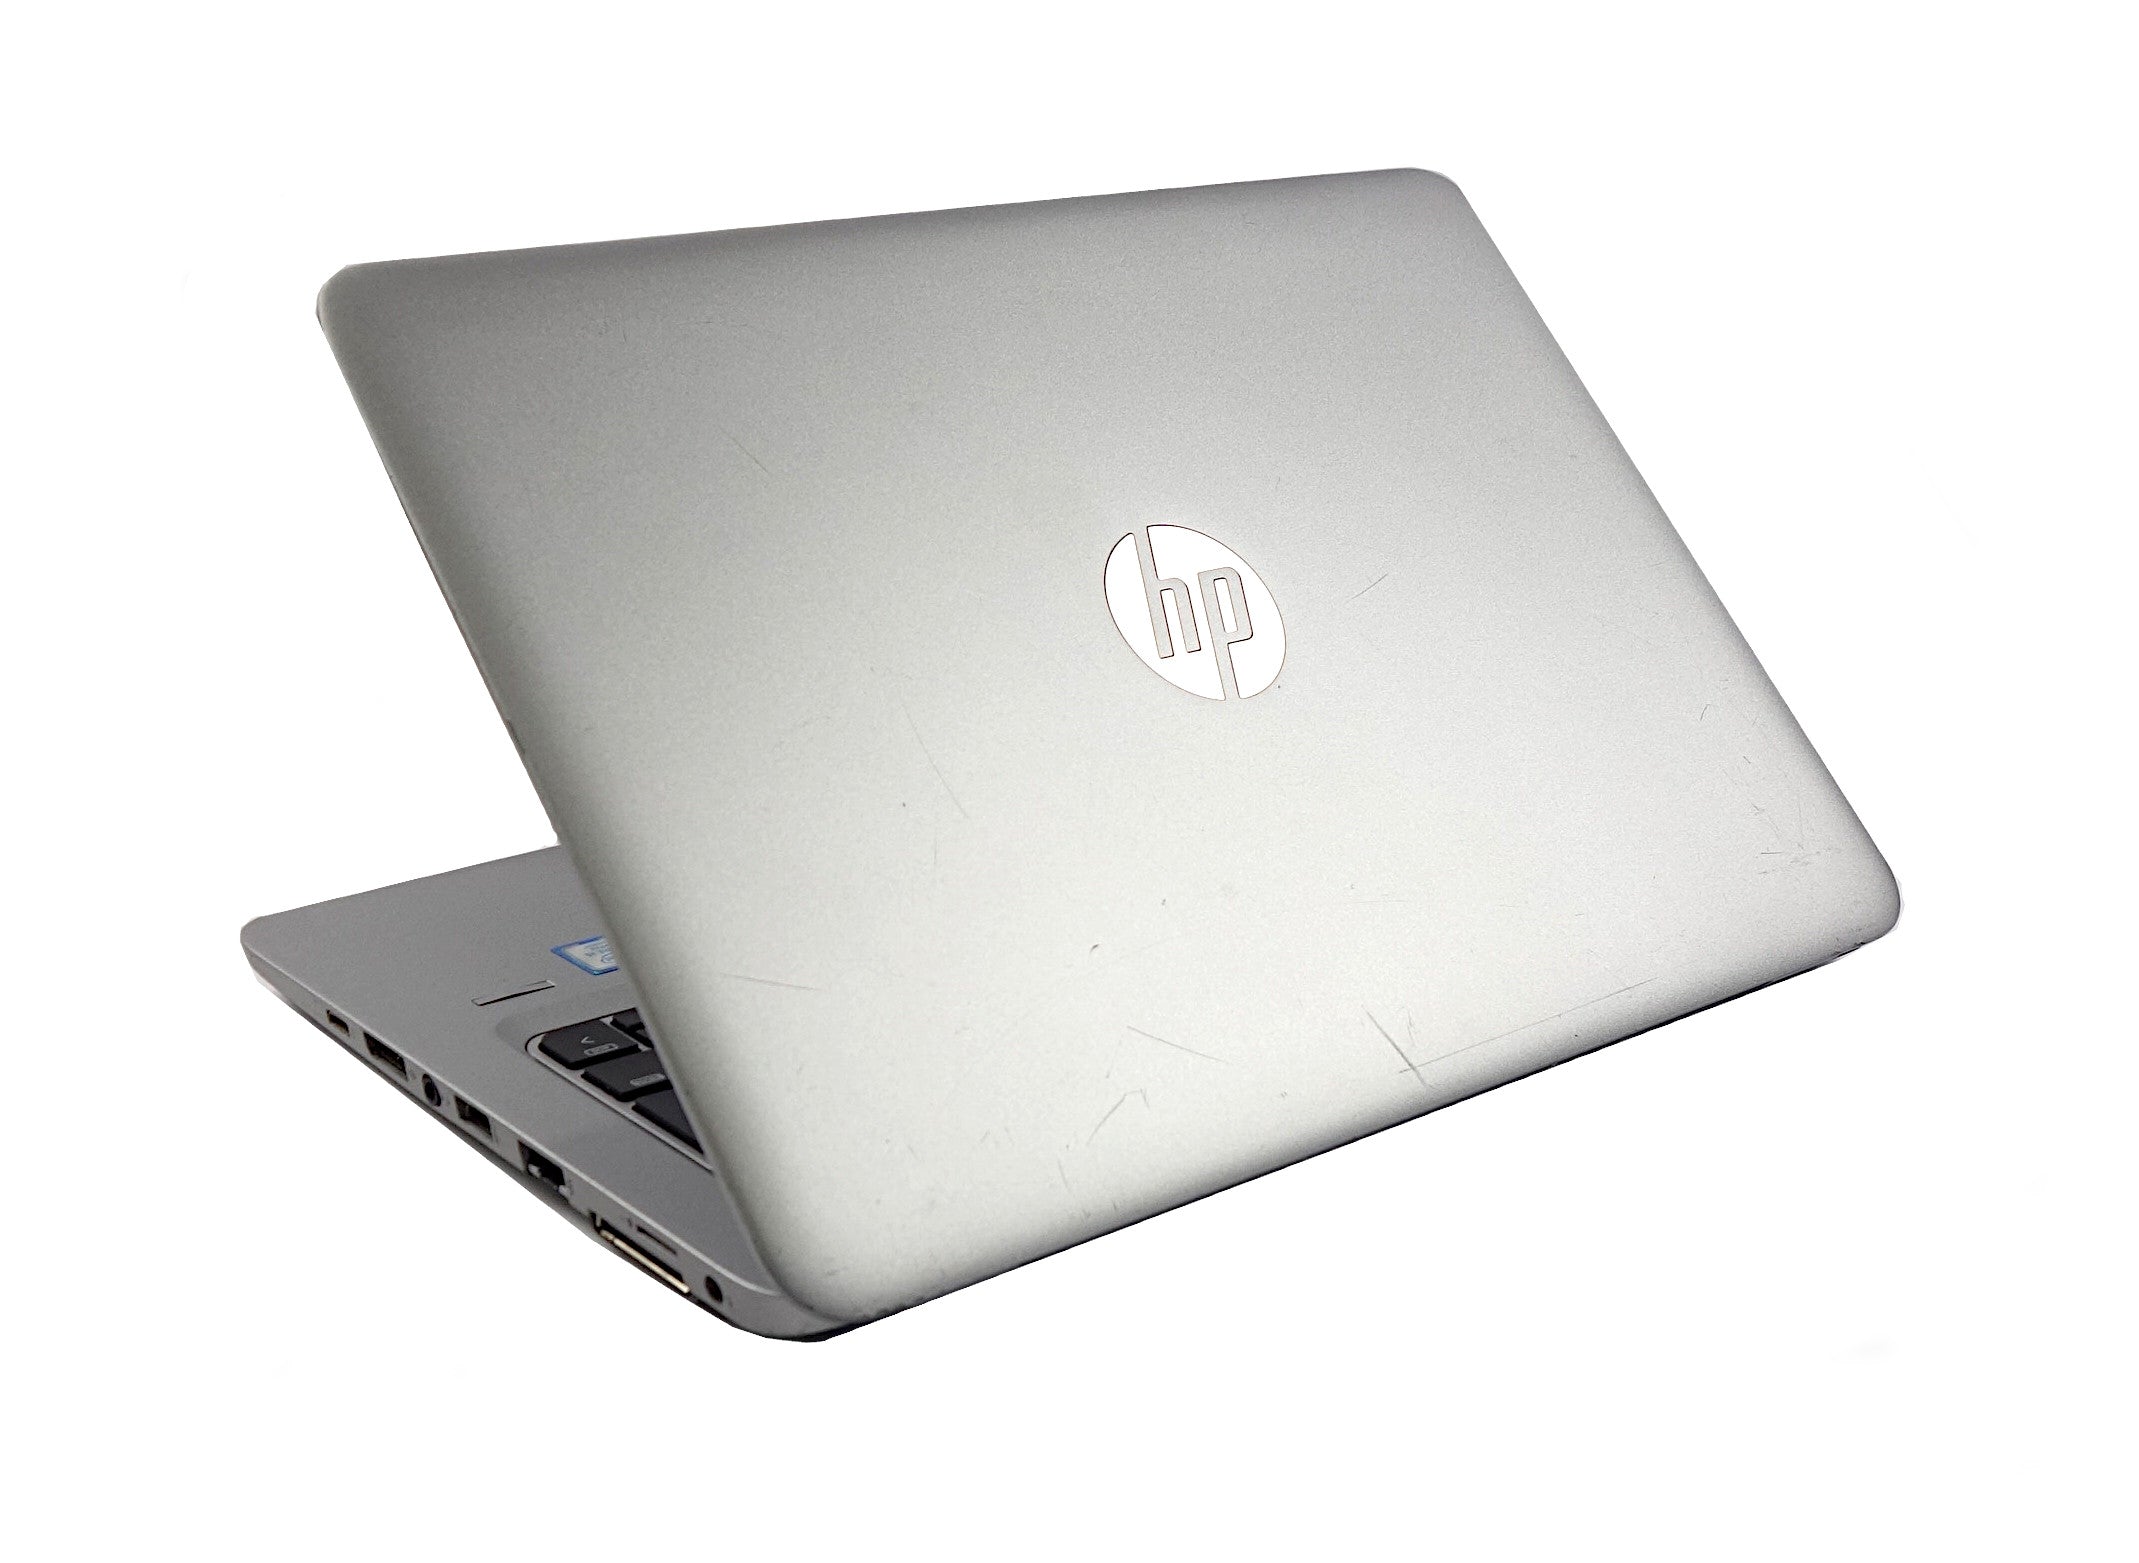 HP EliteBook 820 G3 Laptop, 12.5" i5 6th Gen, 8GB RAM, 256GB SSD